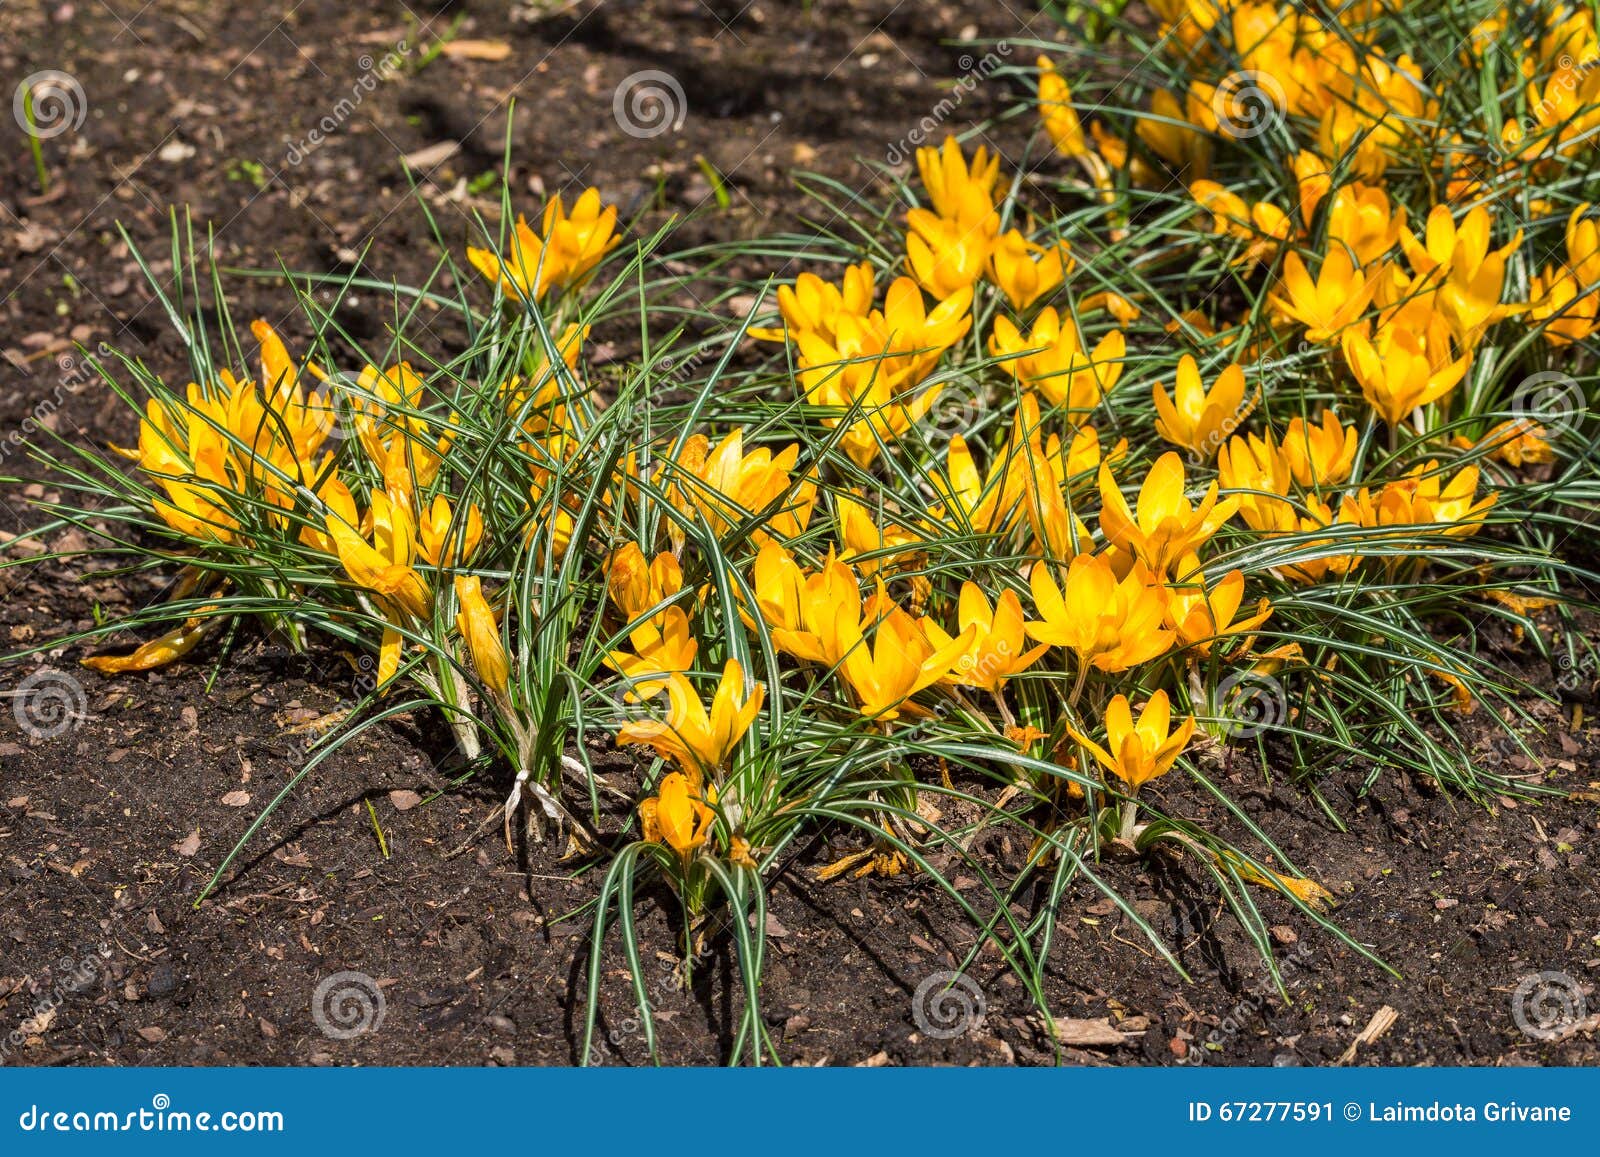 Yellow Crocus Flowers in the Garden. Spring Stock Image - Image of ...